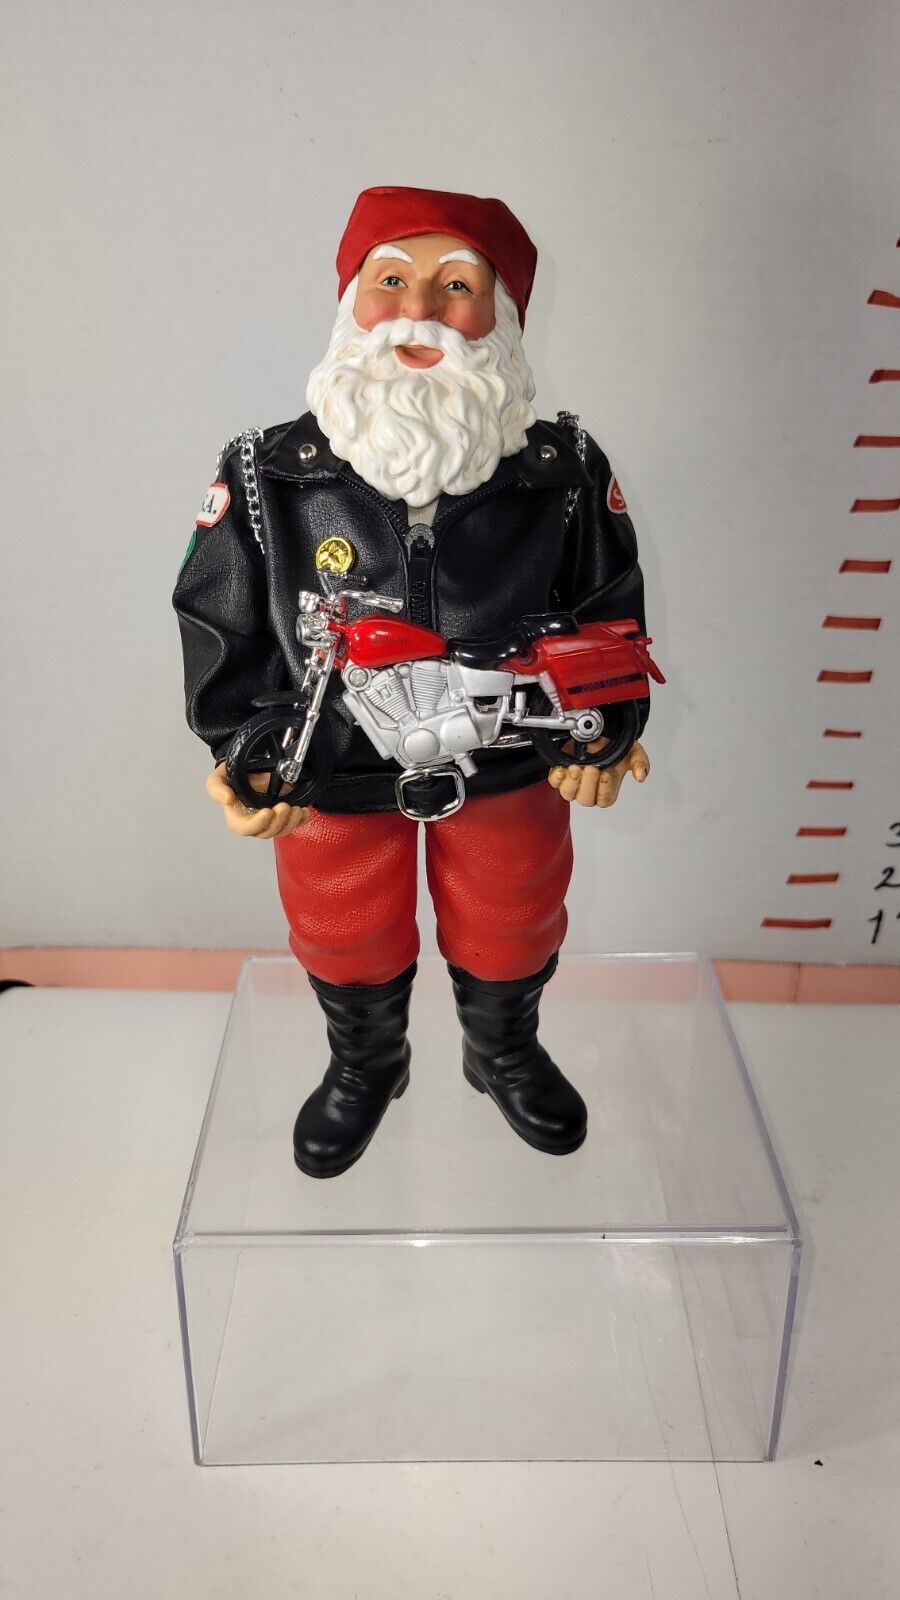 Biker Santa 10.5” Figure Black Leather Jacket, Bandana Holding Motorcycle